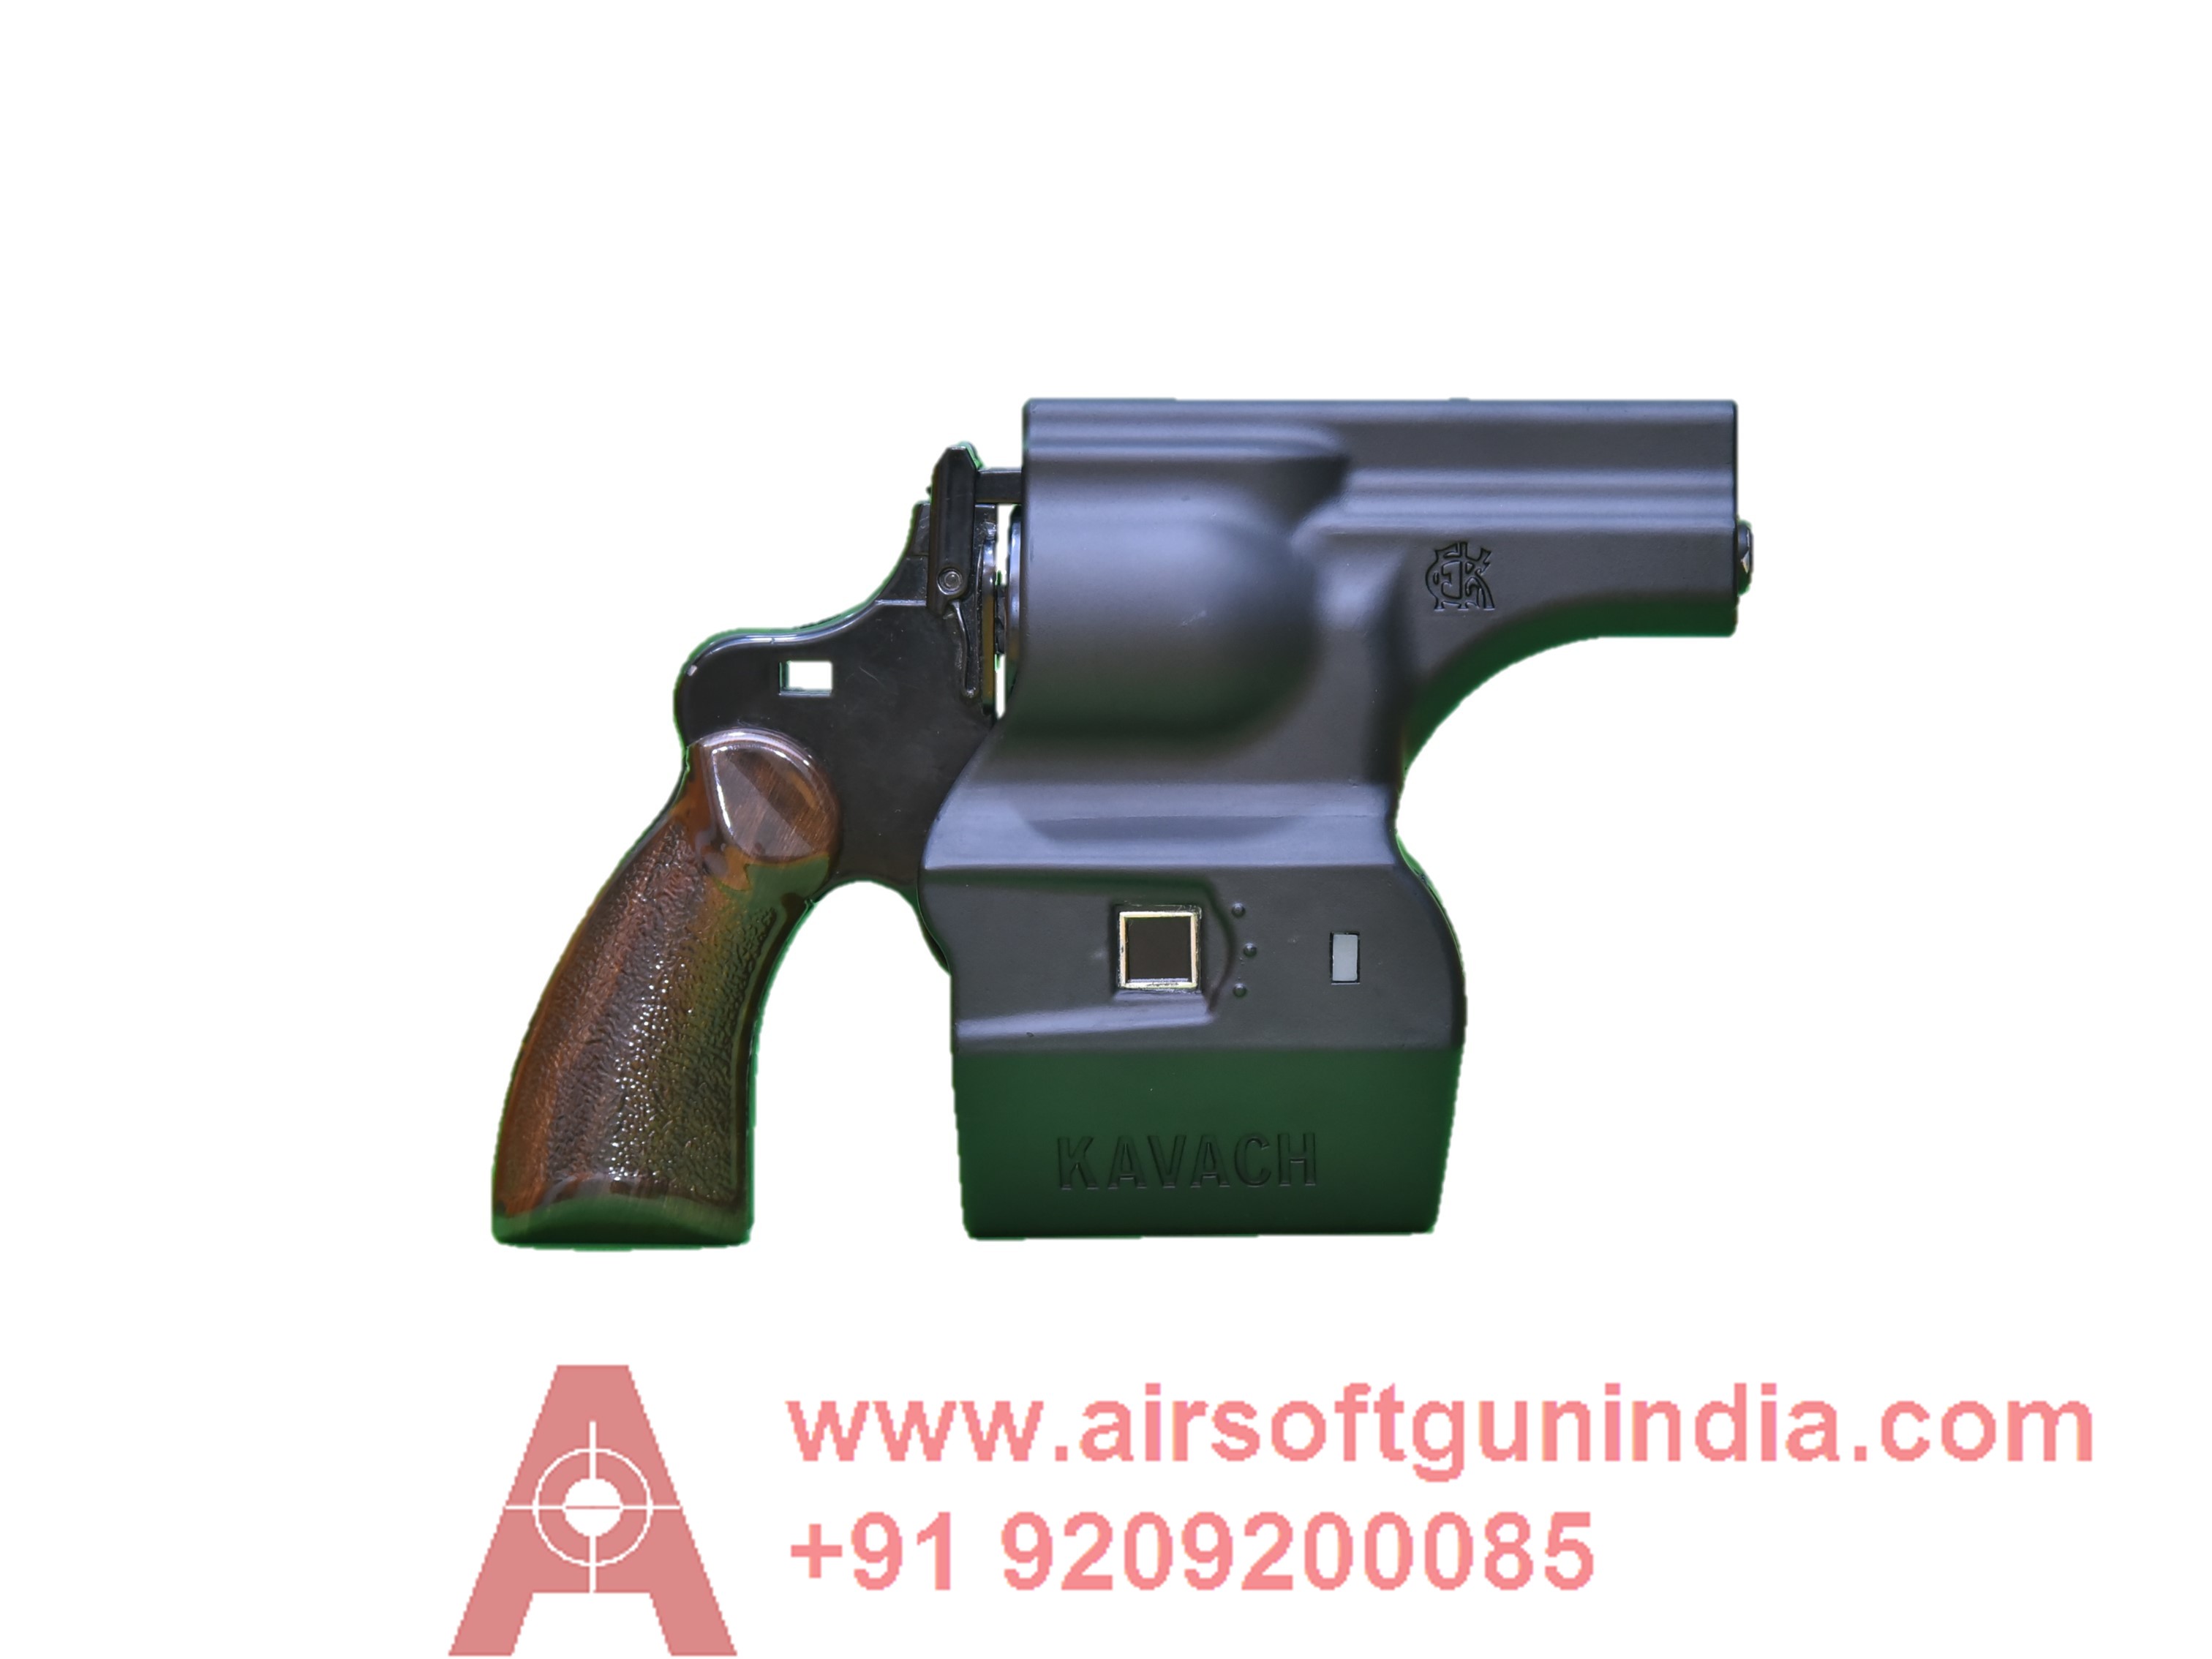 Kavach Smart Holster Fingerprint Gun Holster In India For IOF .32 Revolver By Airsoft Gun India